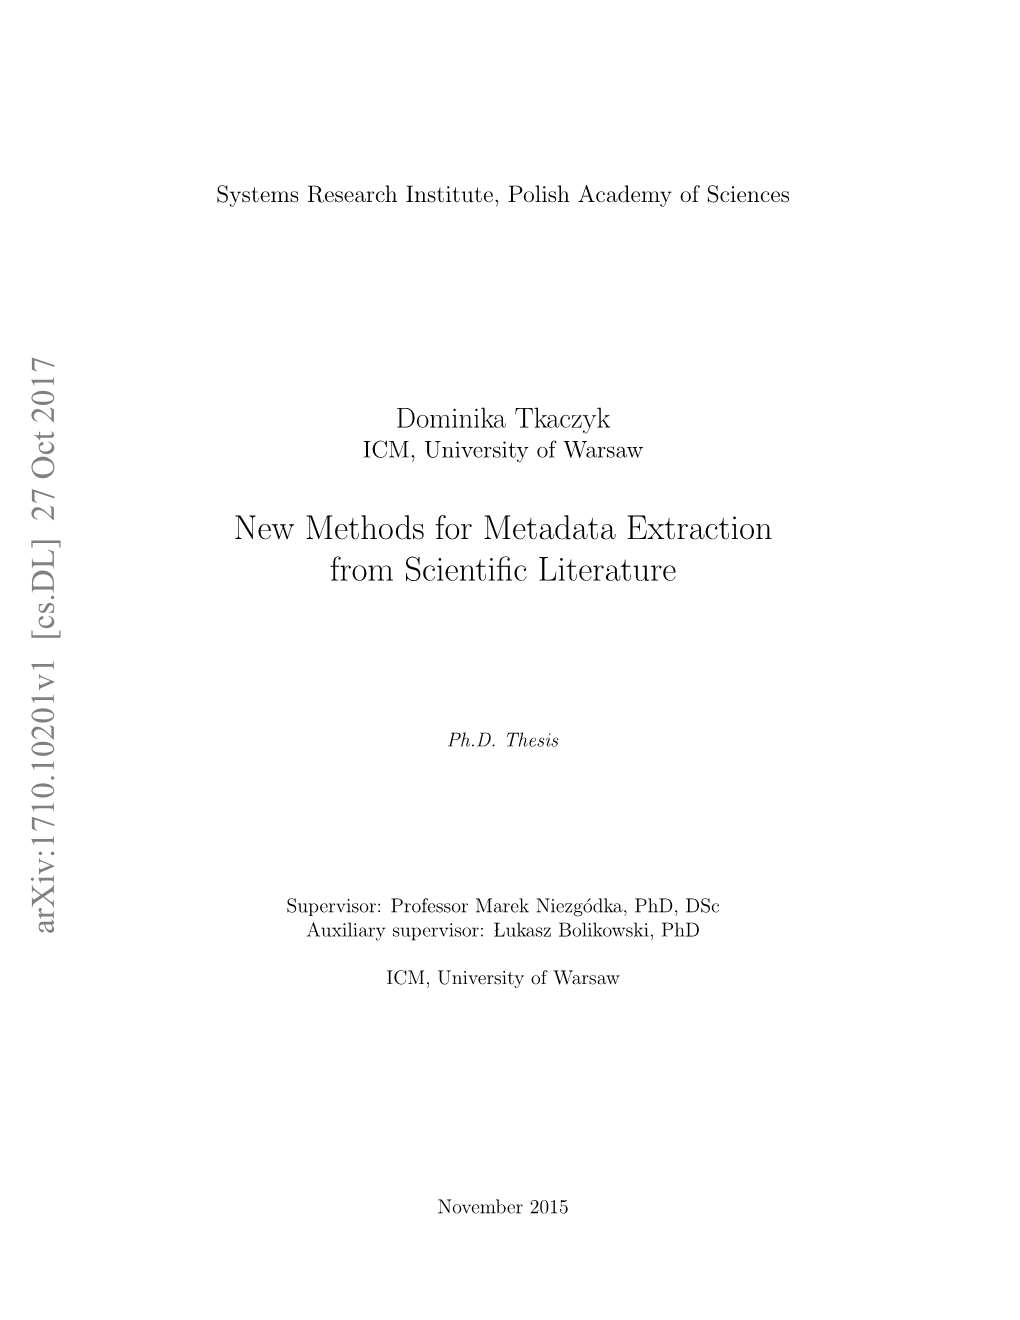 New Methods for Metadata Extraction from Scientific Literature